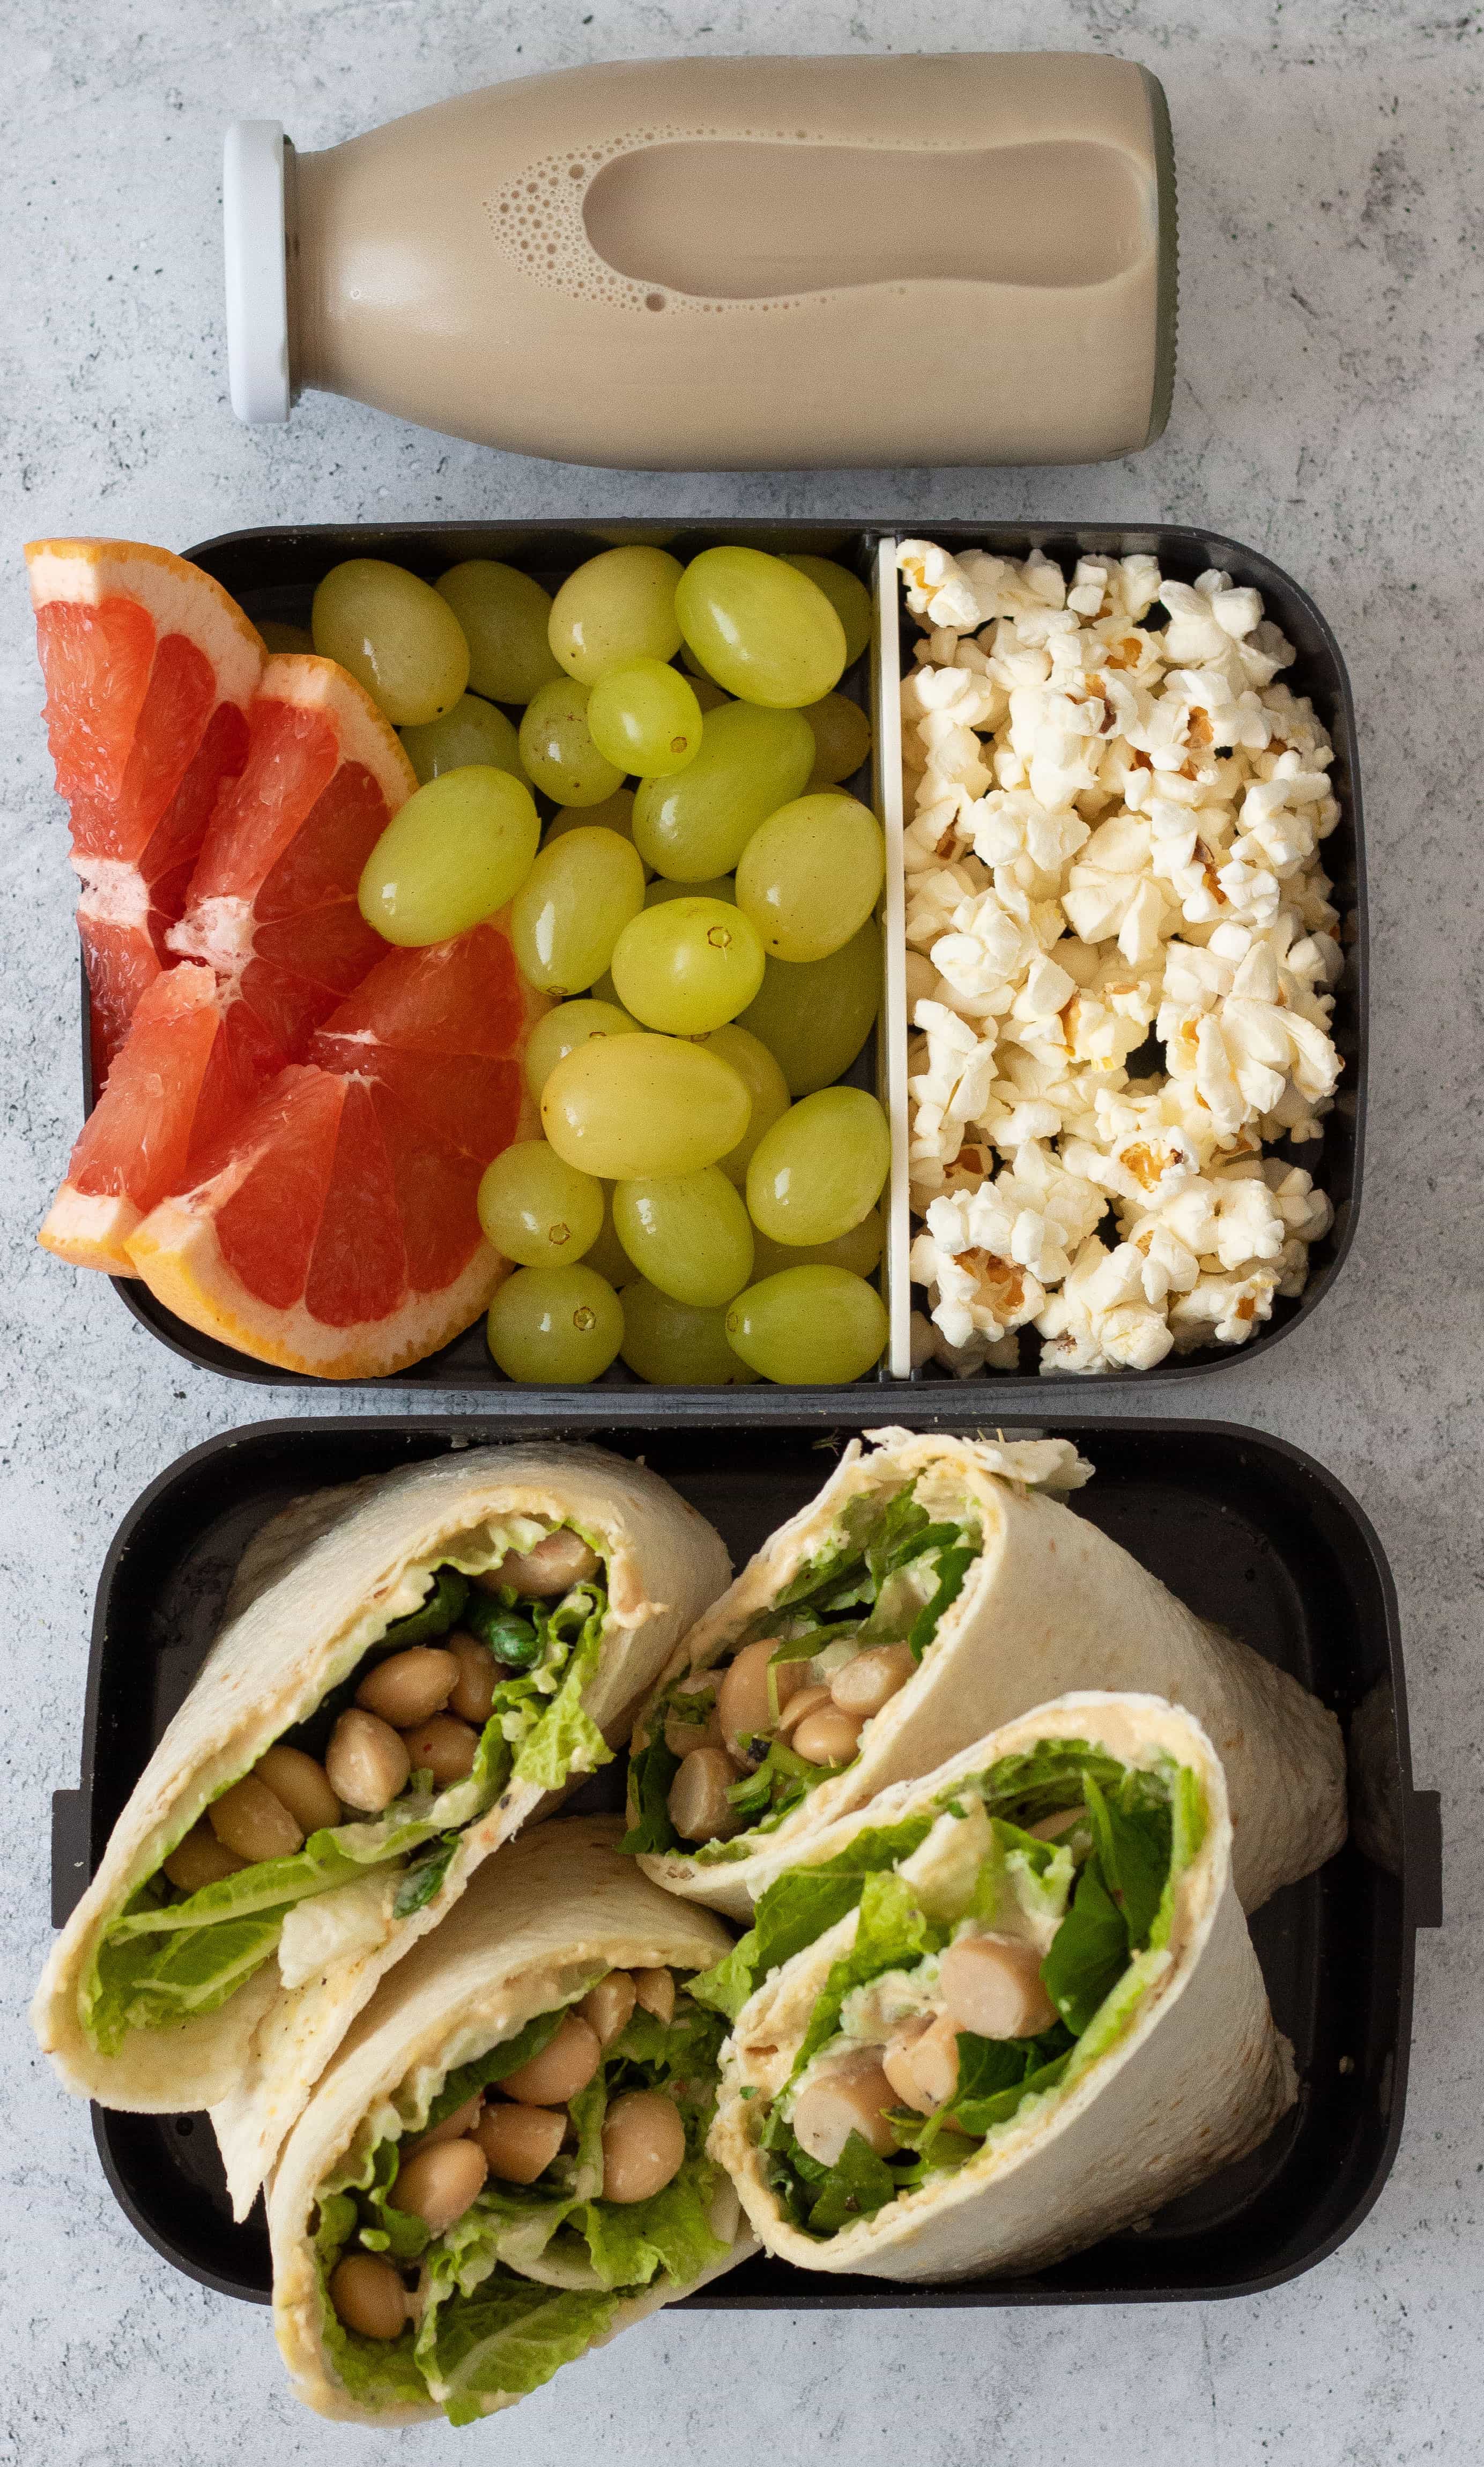 5 No-Heat Vegan School Lunch Ideas (Easy & Healthy Recipes) | The Green ...